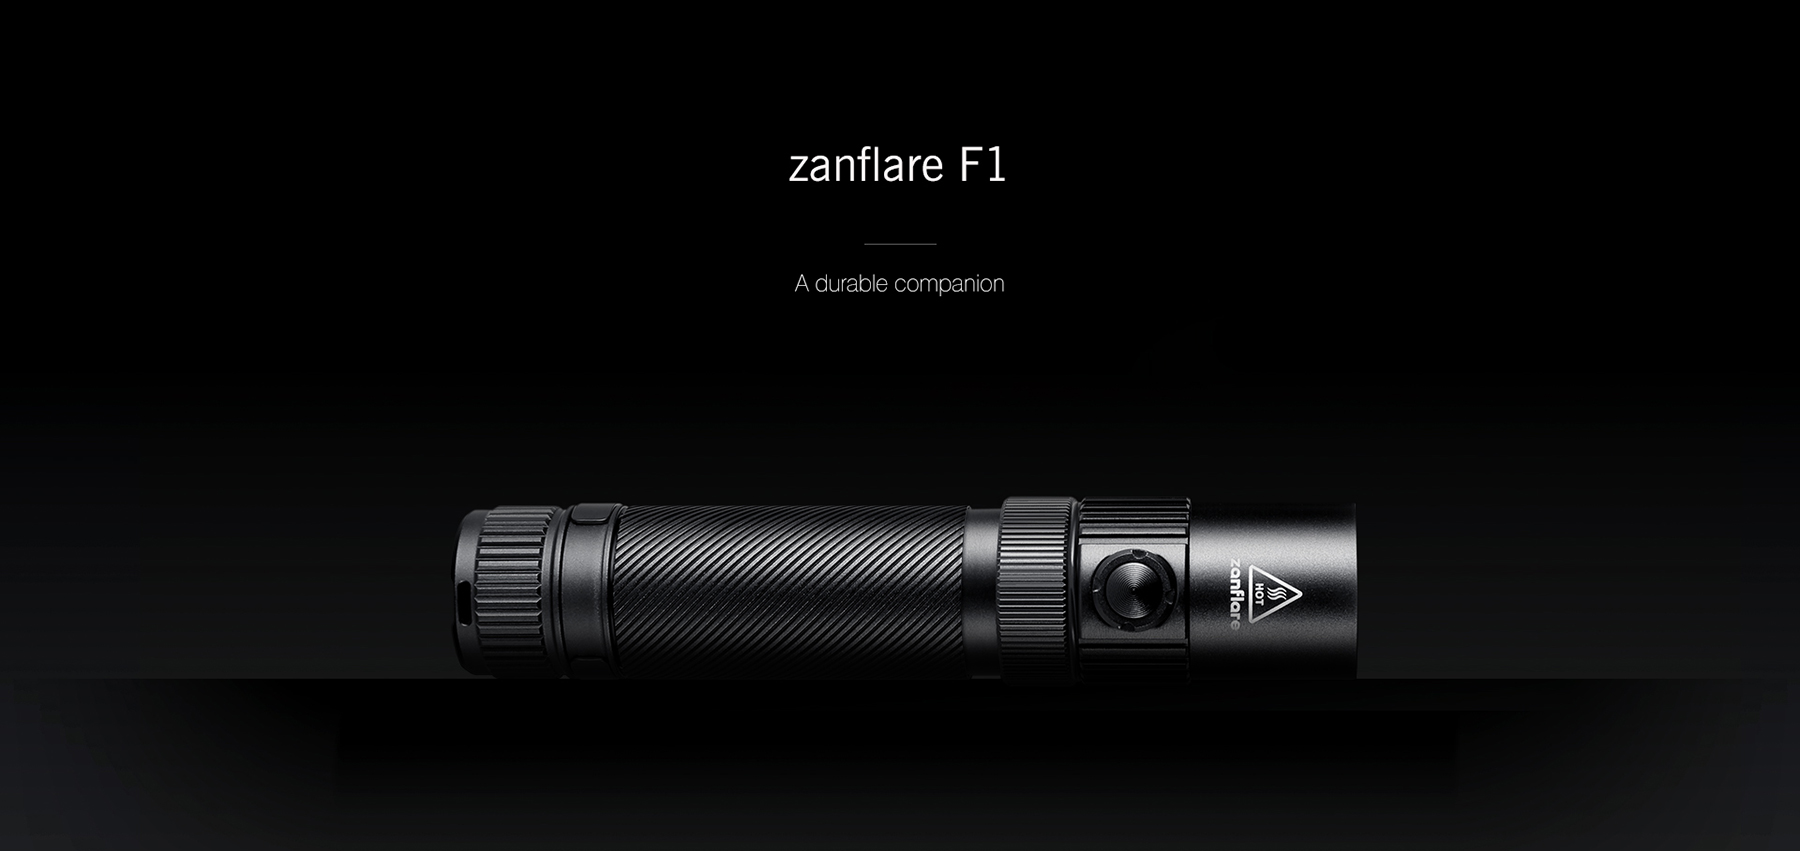 zanflare F1 Cree XPL V6 1240Lm Rechargeable LED Flashlight